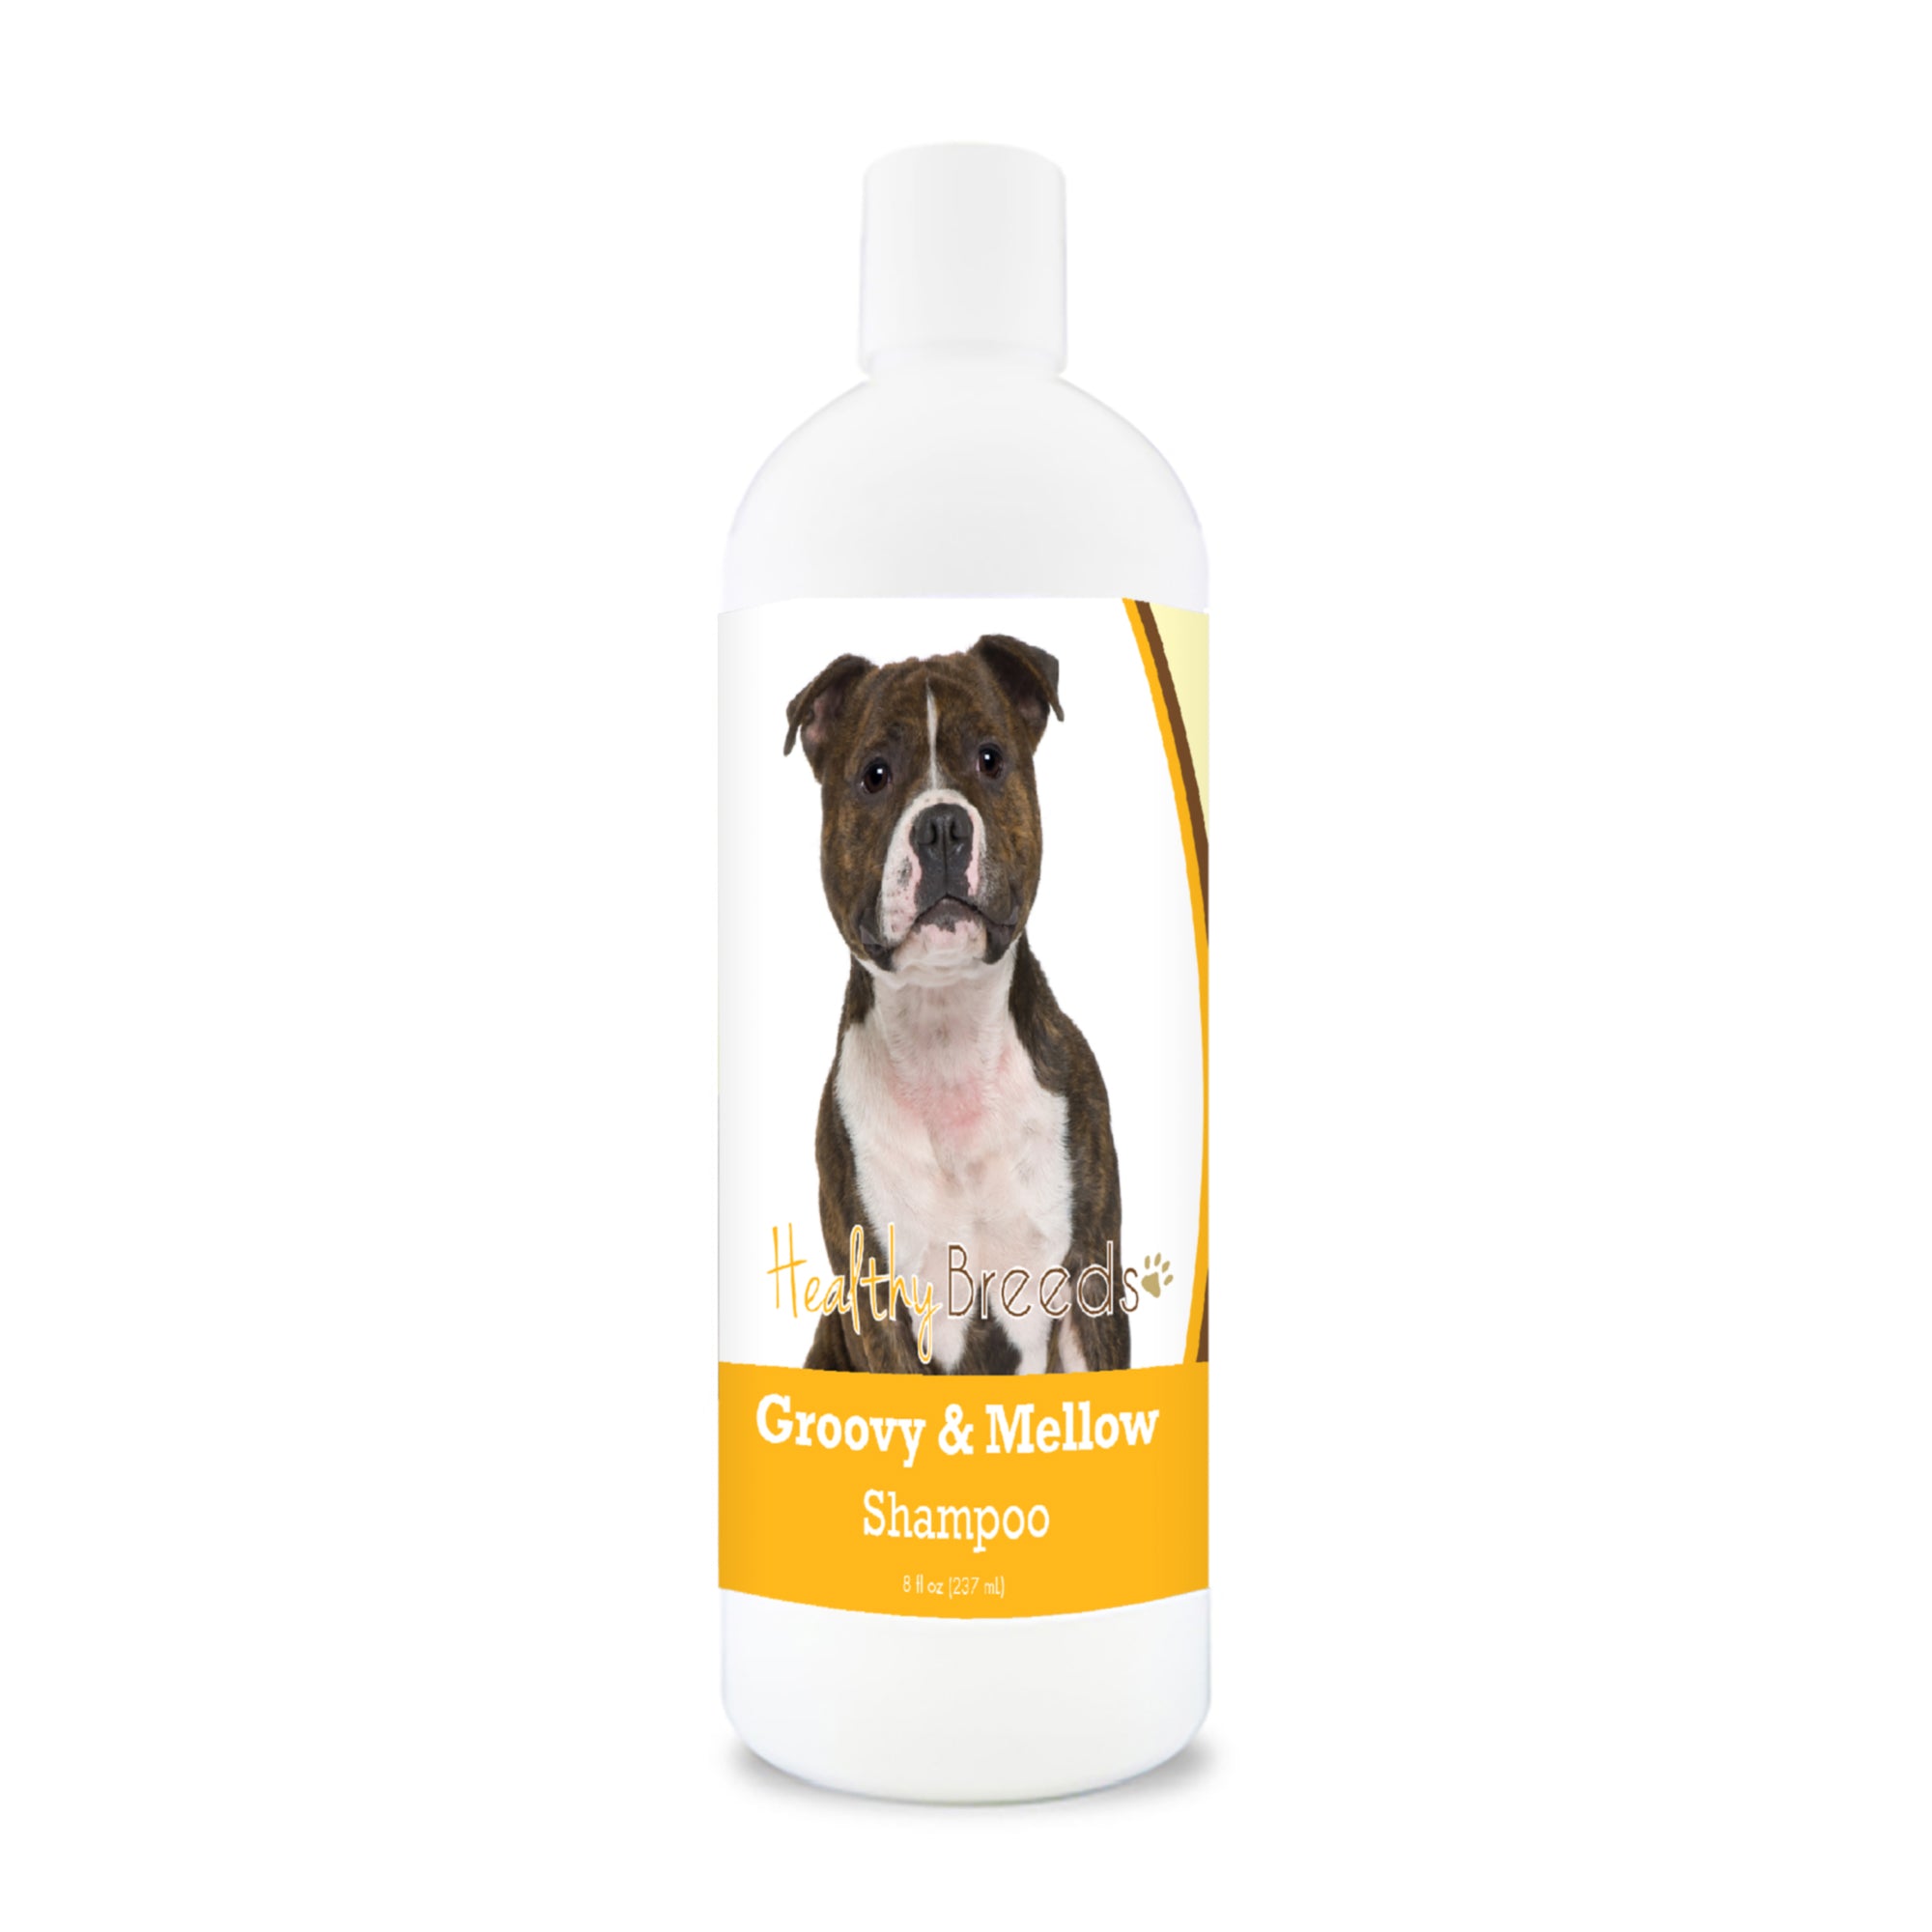 Staffordshire Bull Terrier Groovy & Mellow Shampoo 8 oz